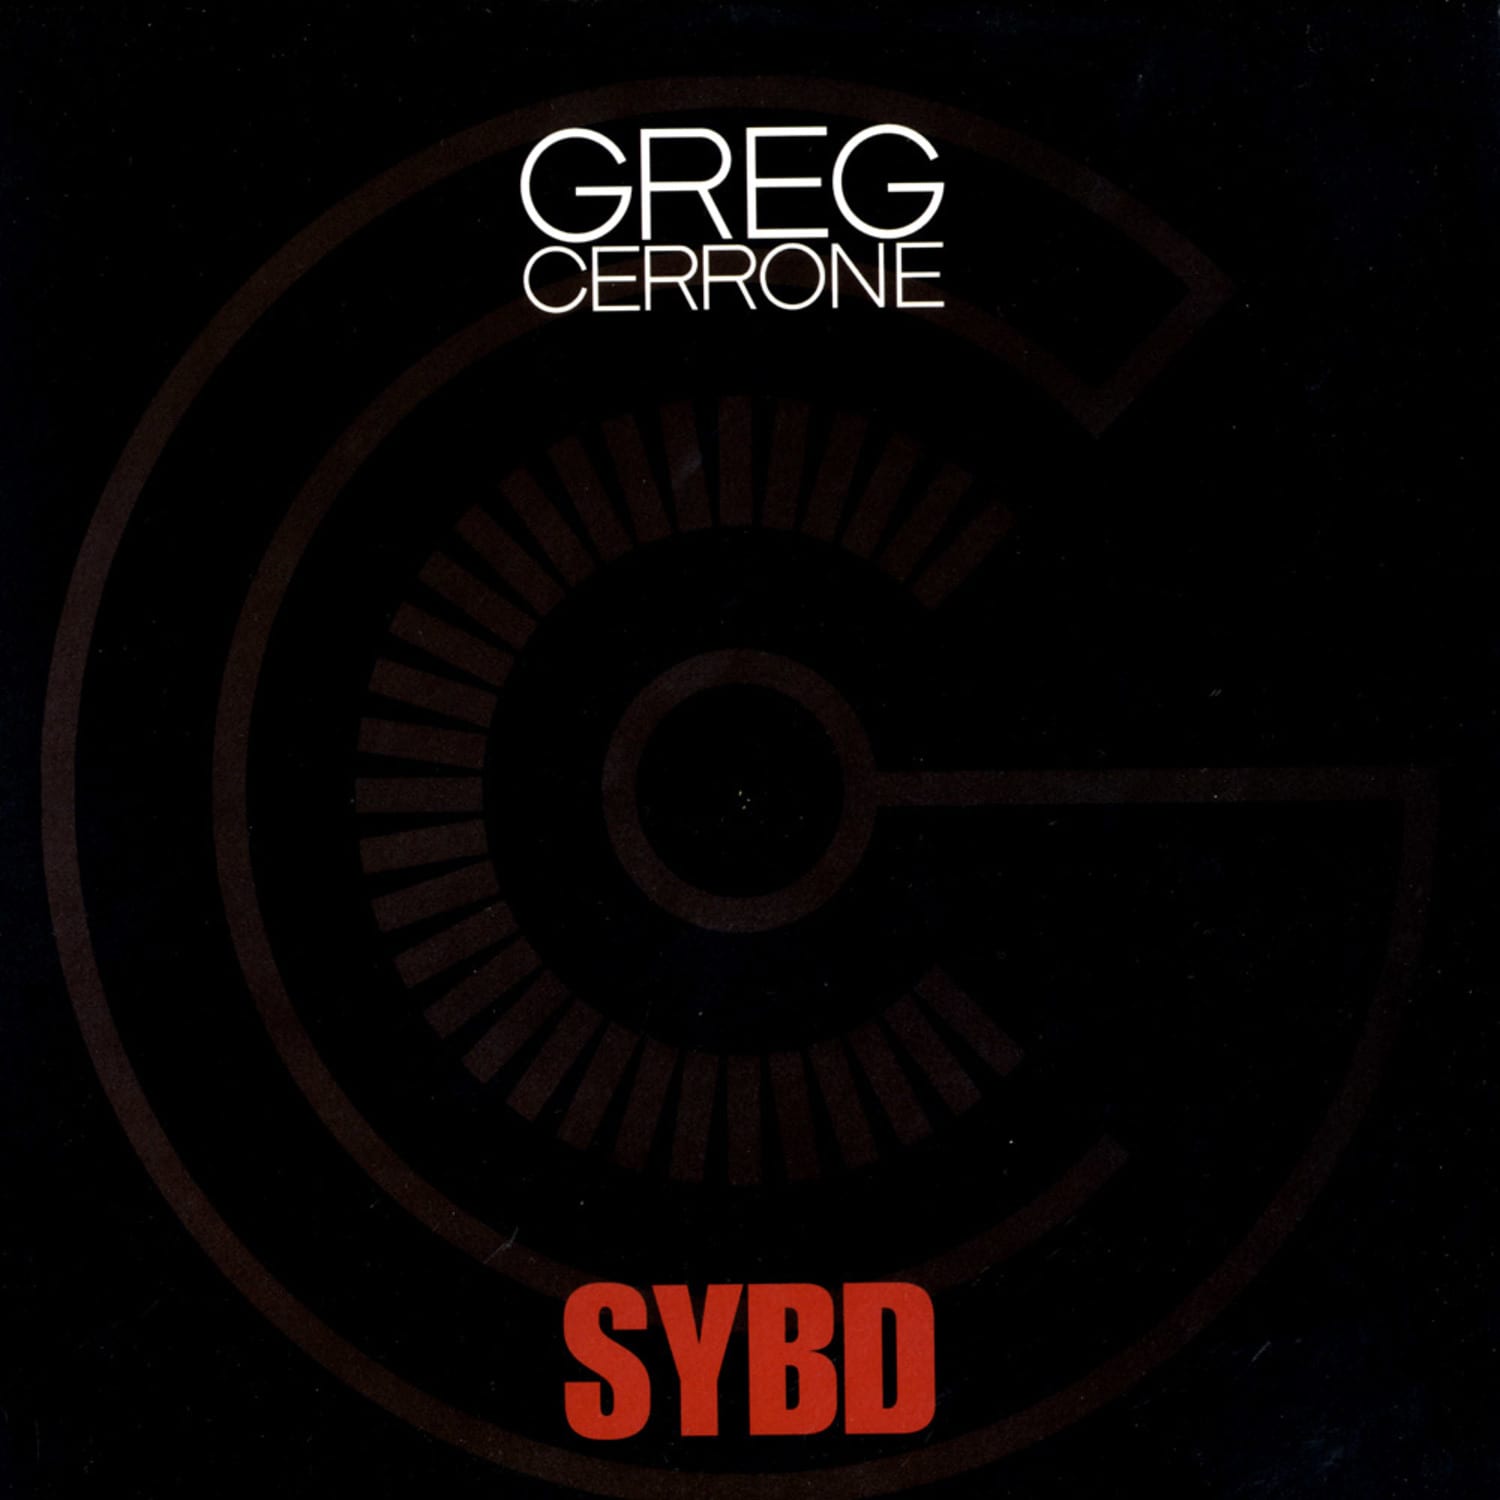 Greg Cerrone - SYBD